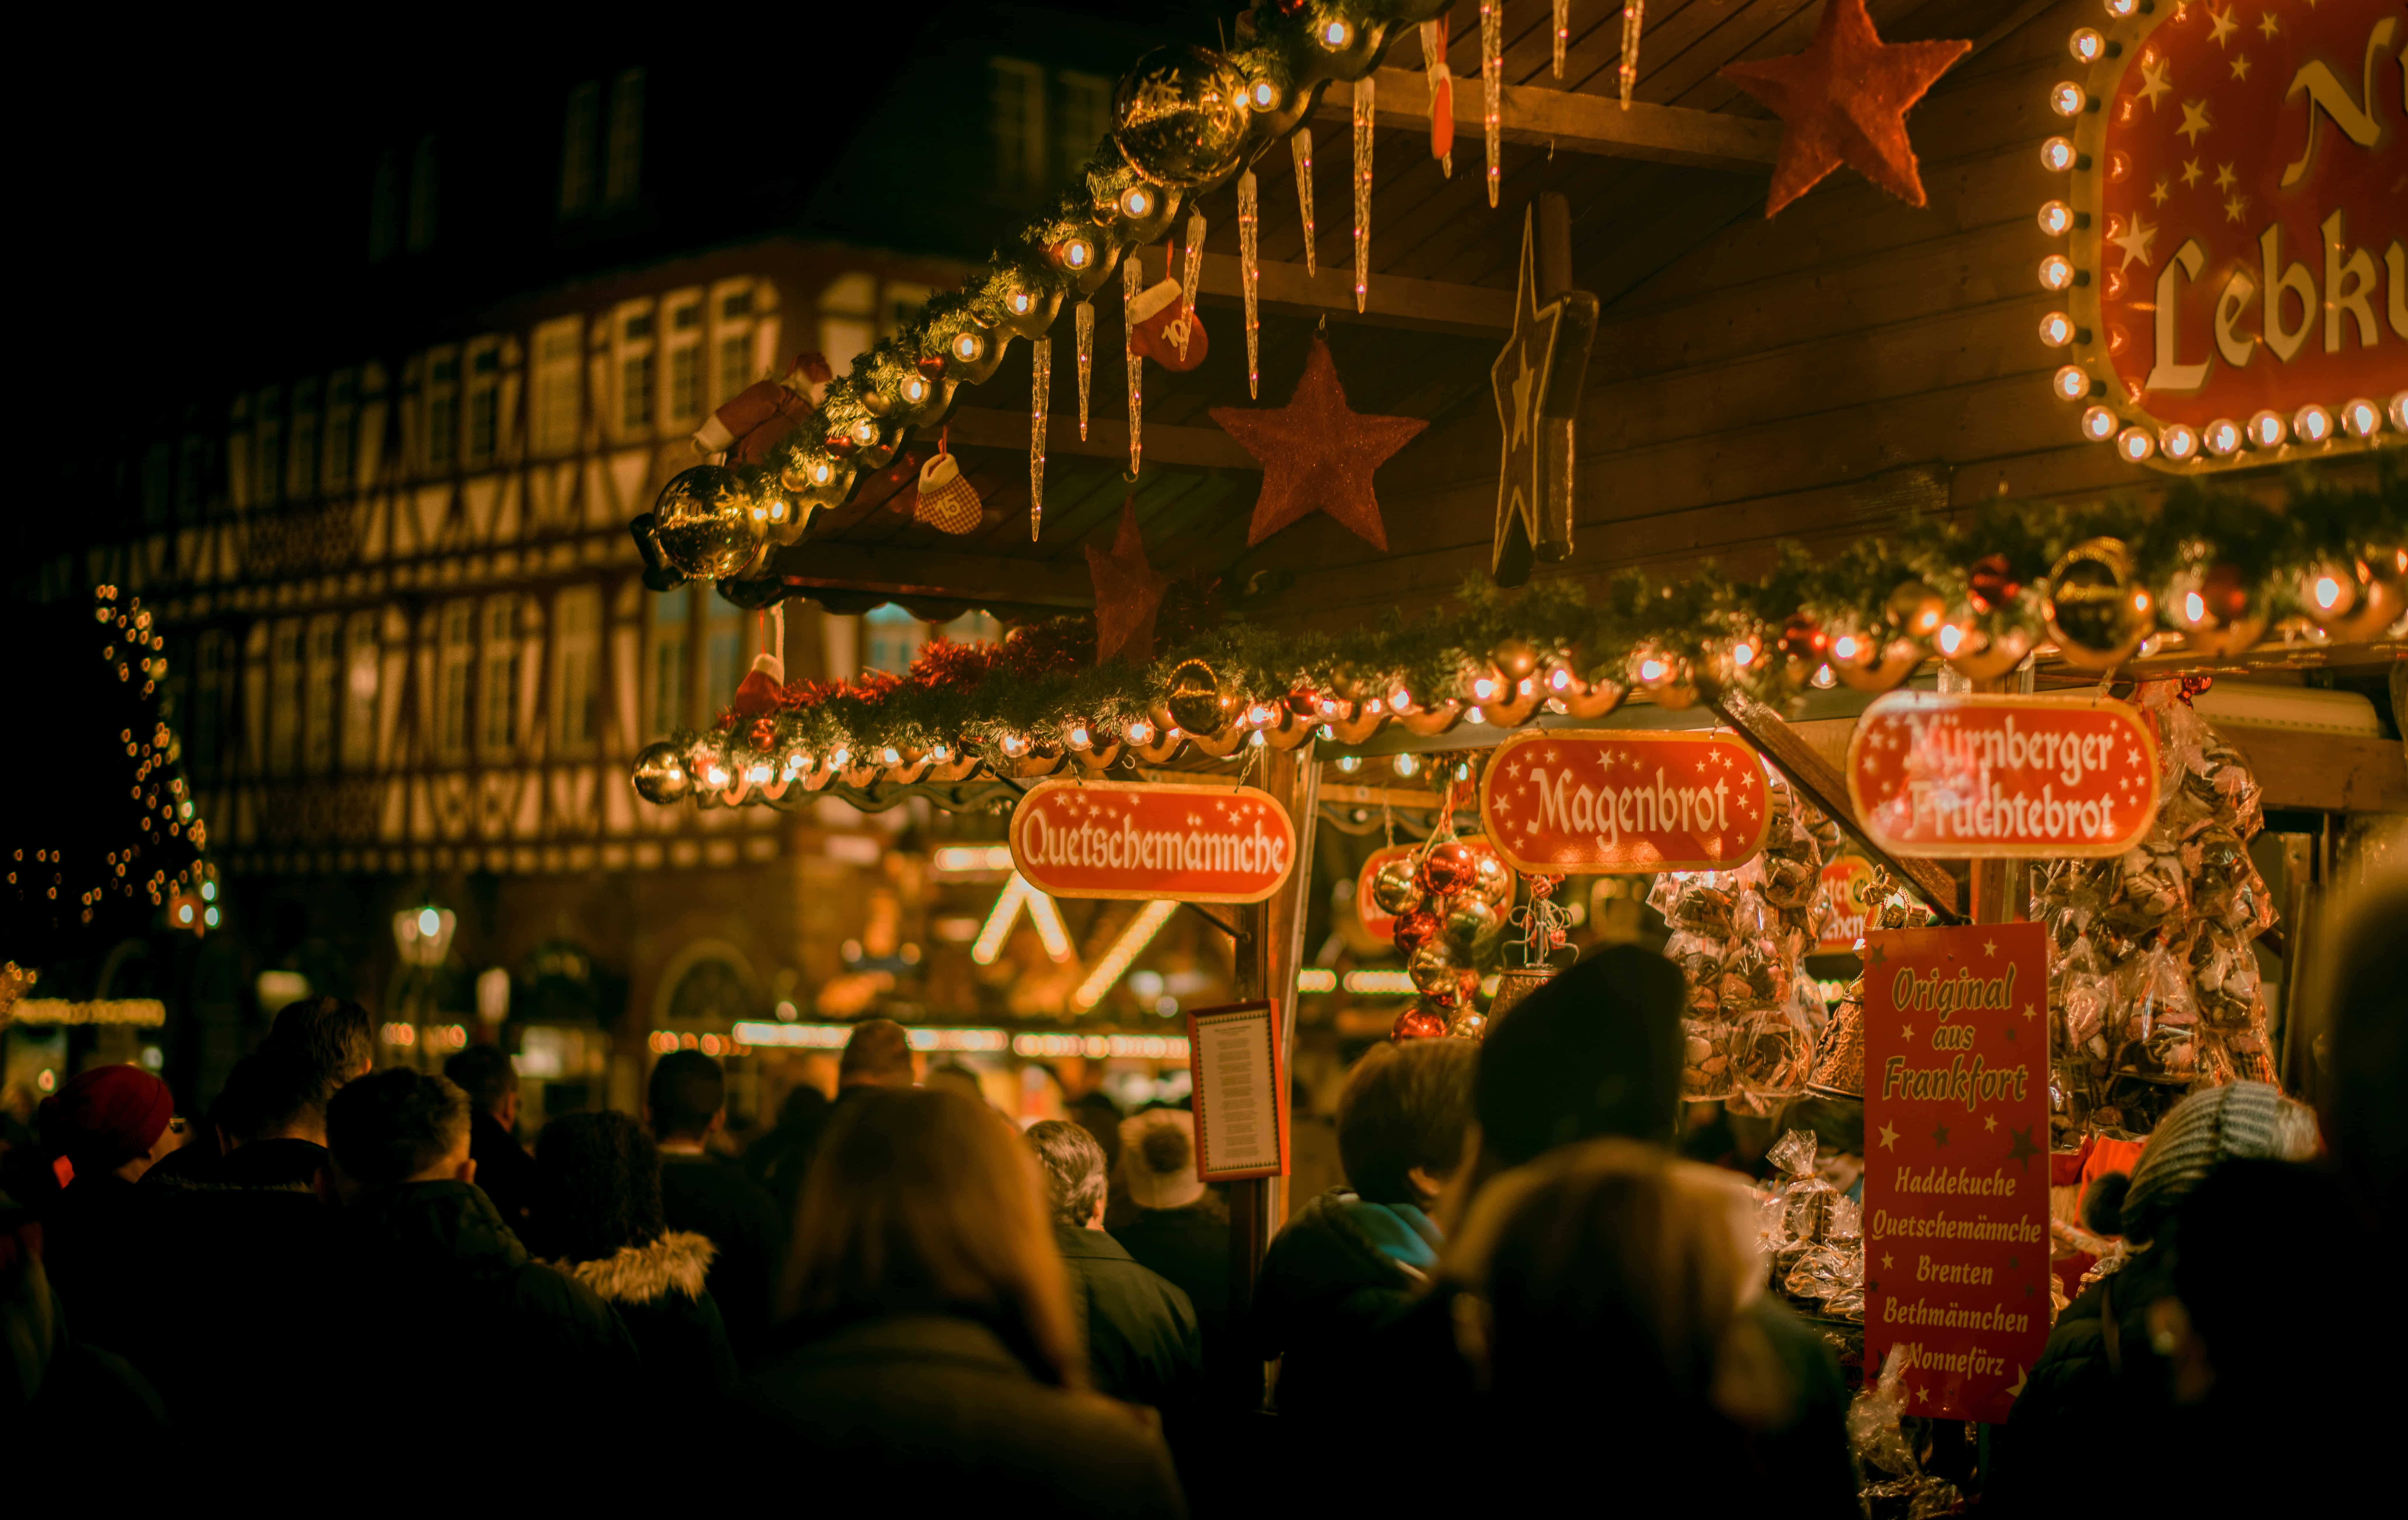 A Christmas market